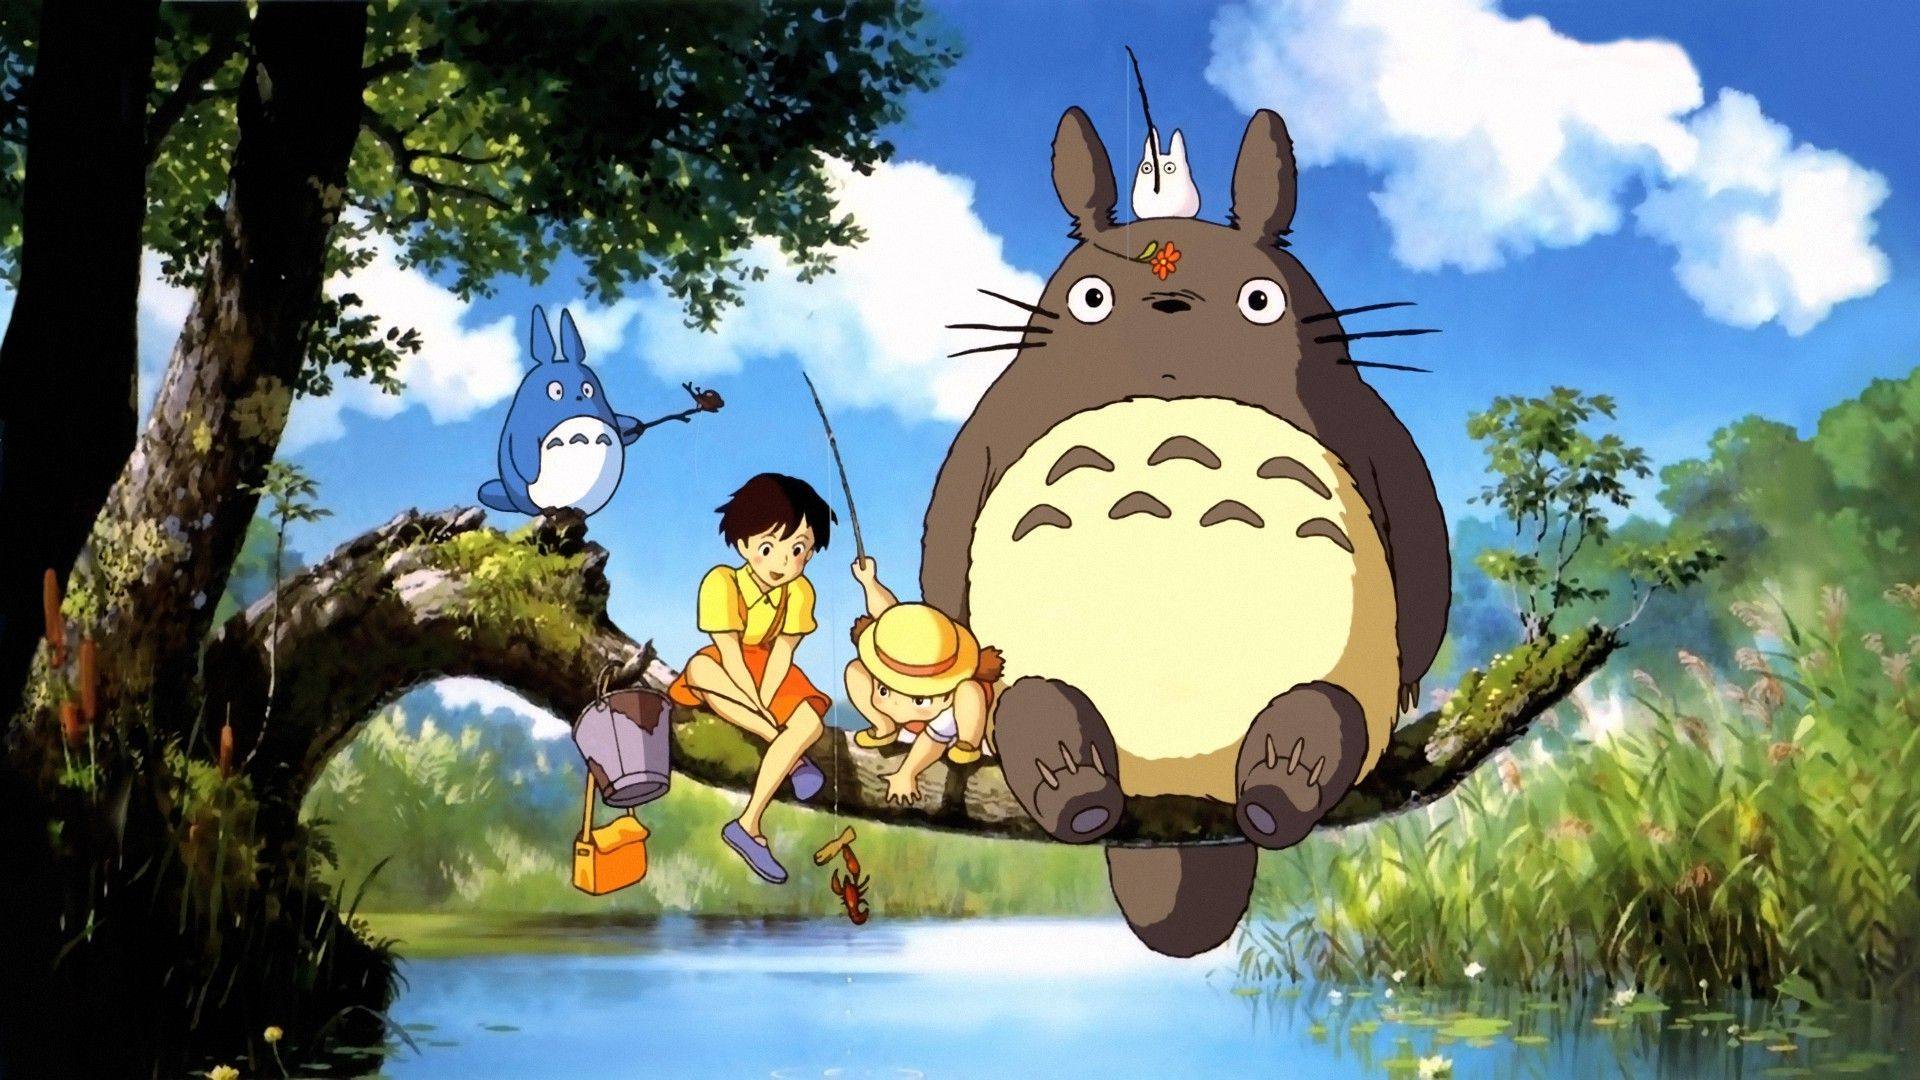 A screen grab from My Neighbor Totoro from Studio Ghibli. Photo: Studio Ghibli